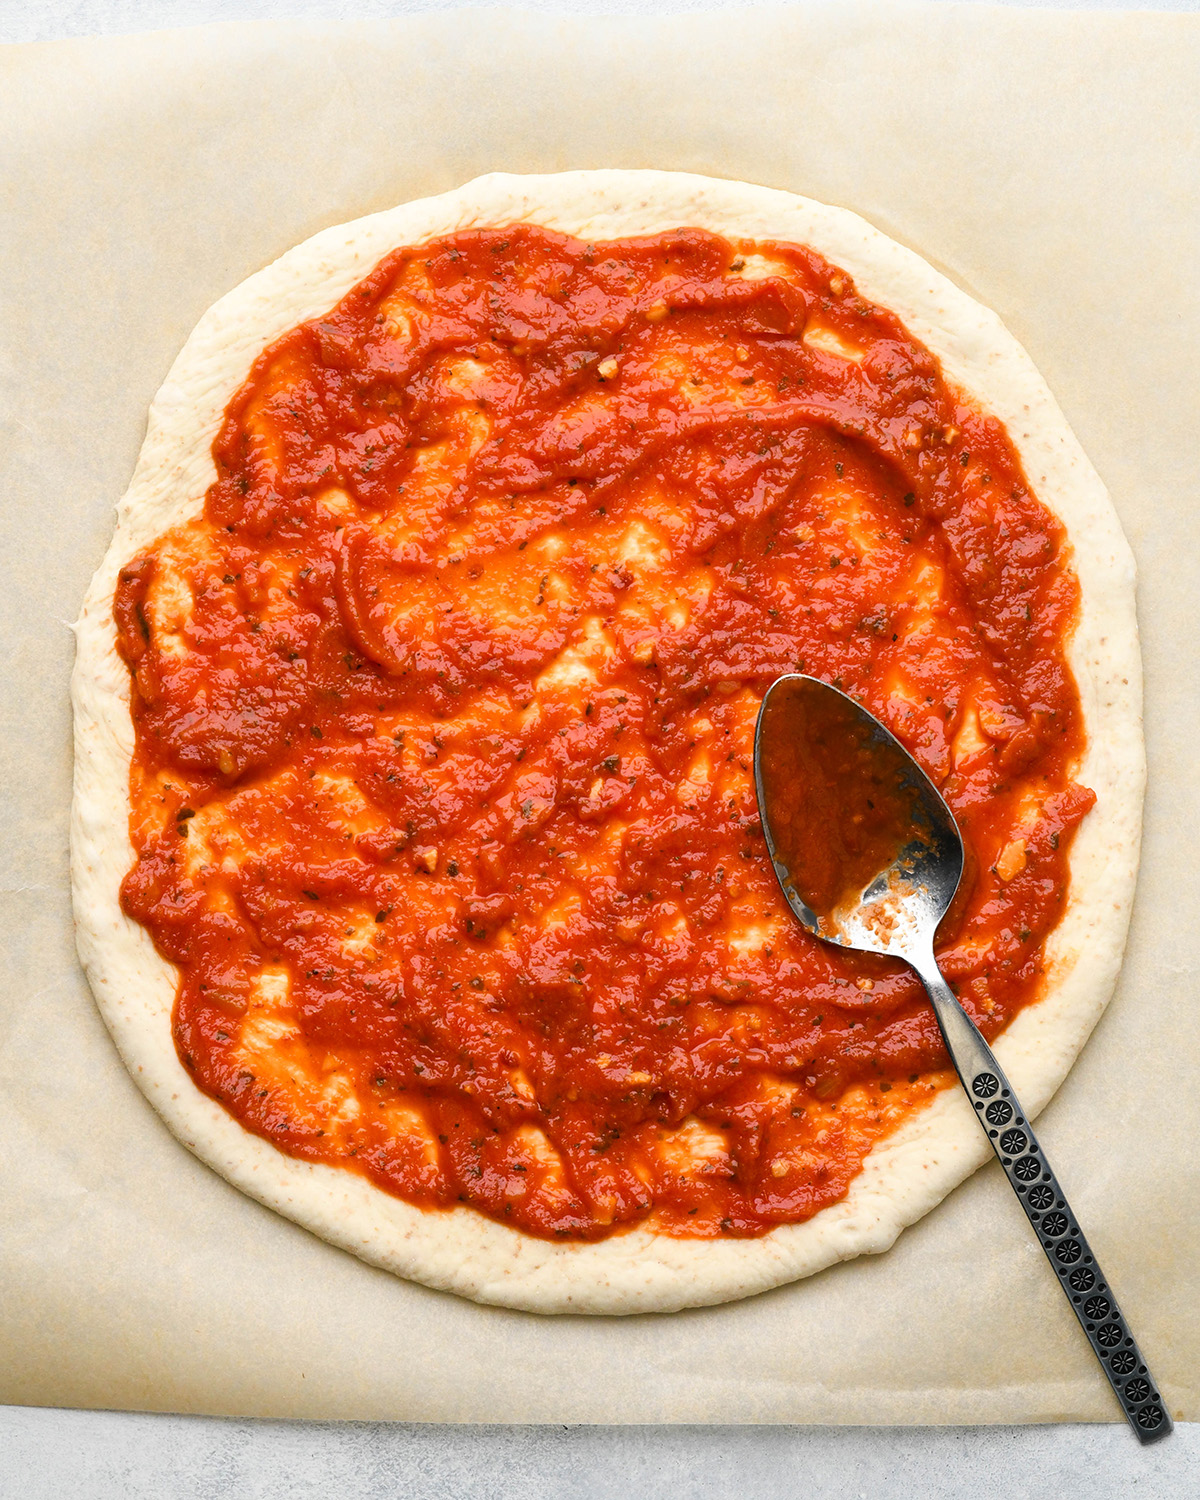 spreading sauce onto pizza dough to make BBQ Chicken Pizza Recipe